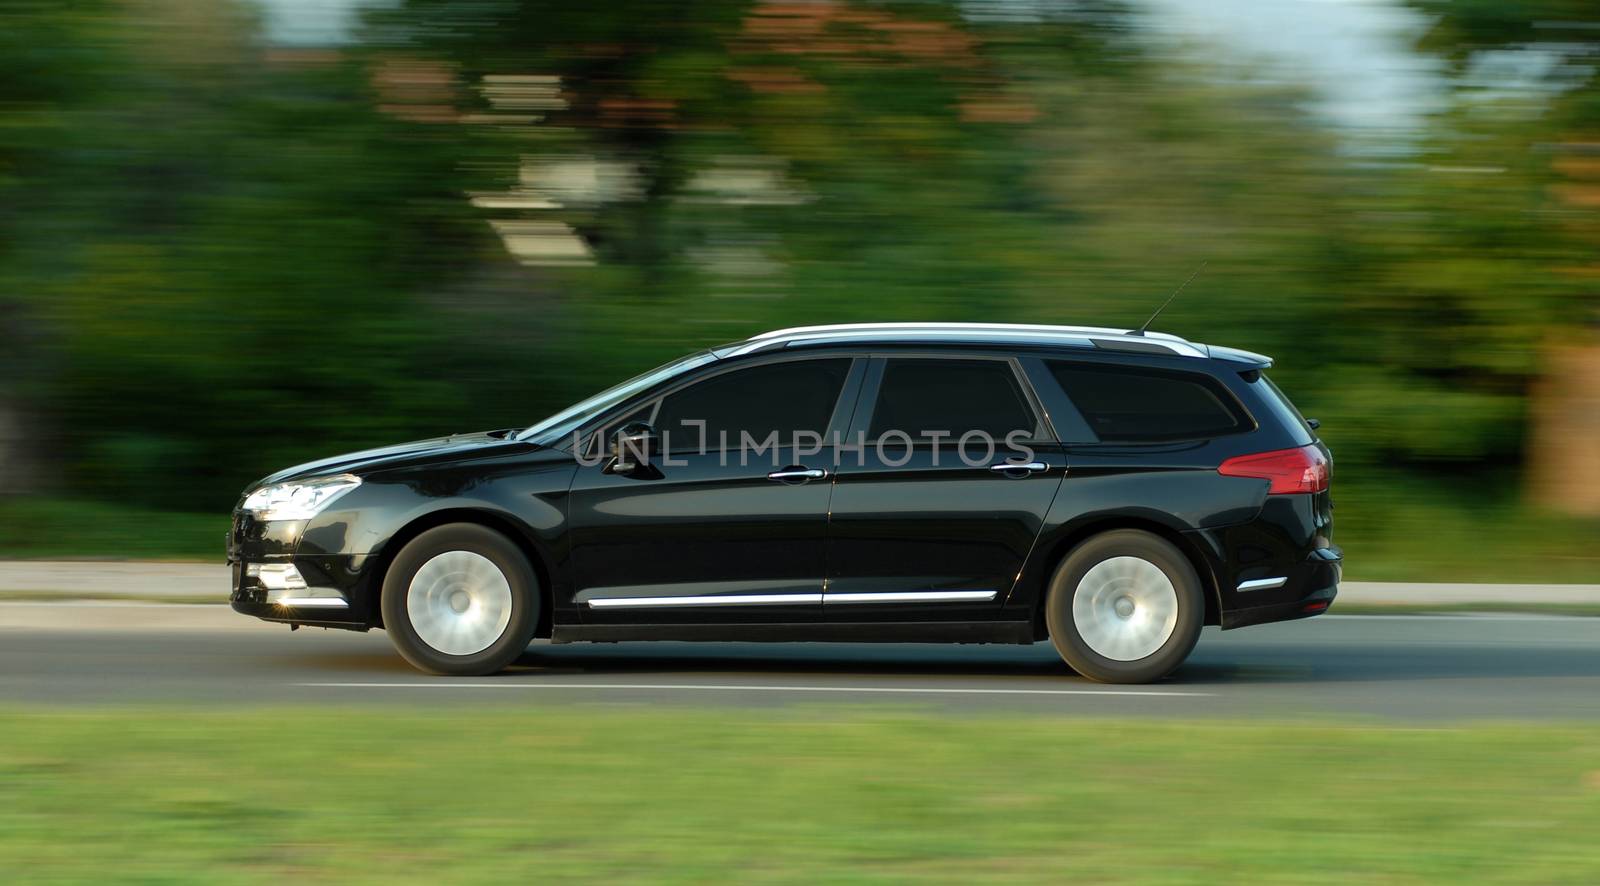 car photographed at high speeds, moving car